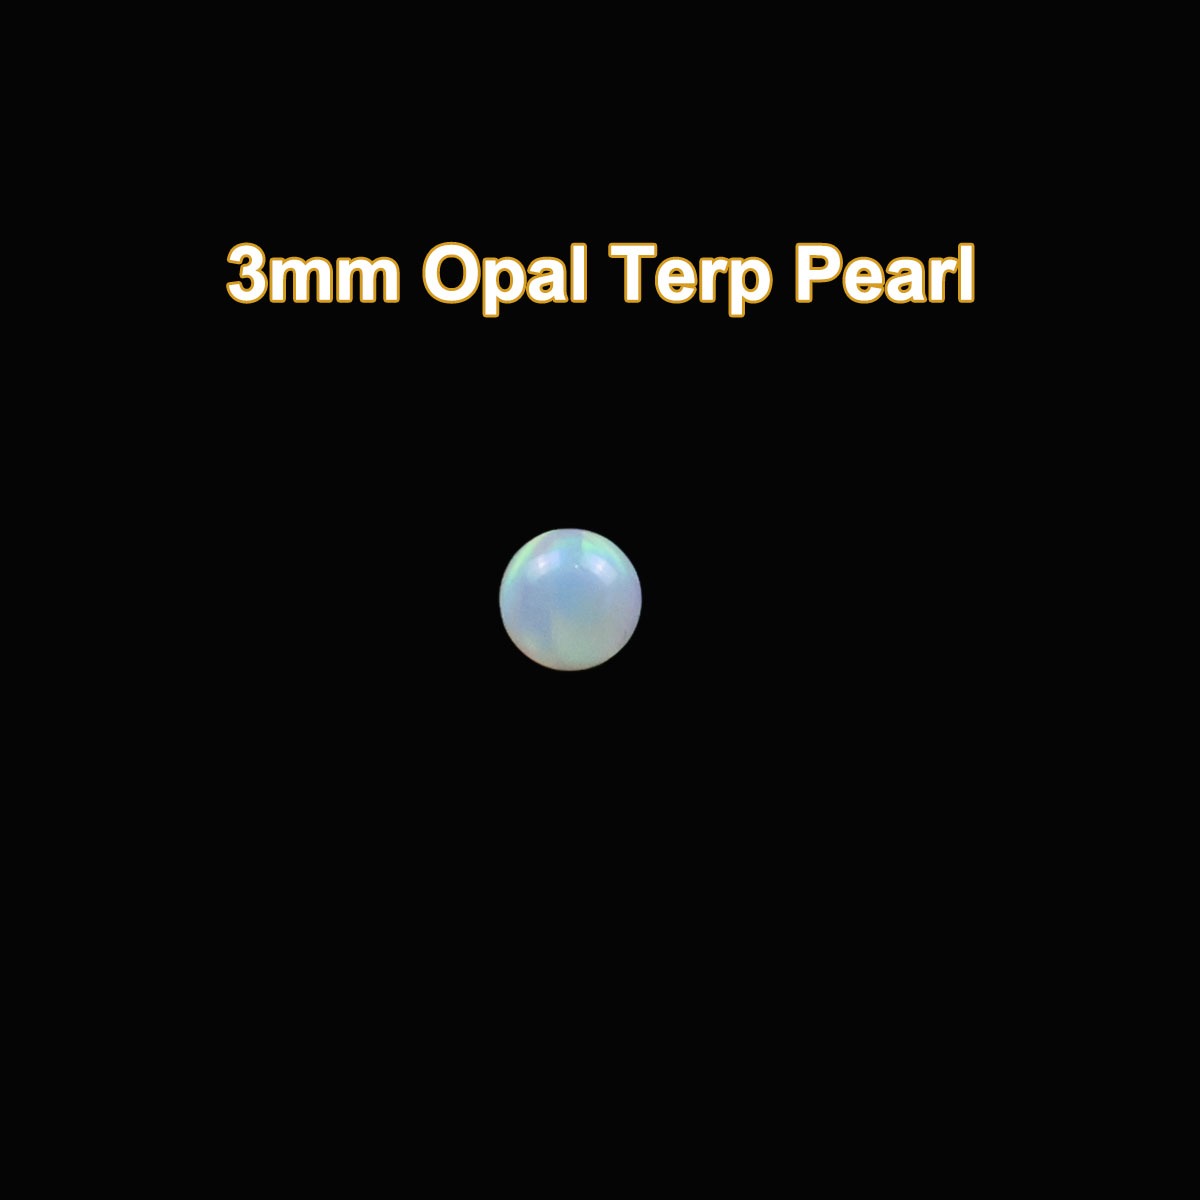 3mm opal terp pearl